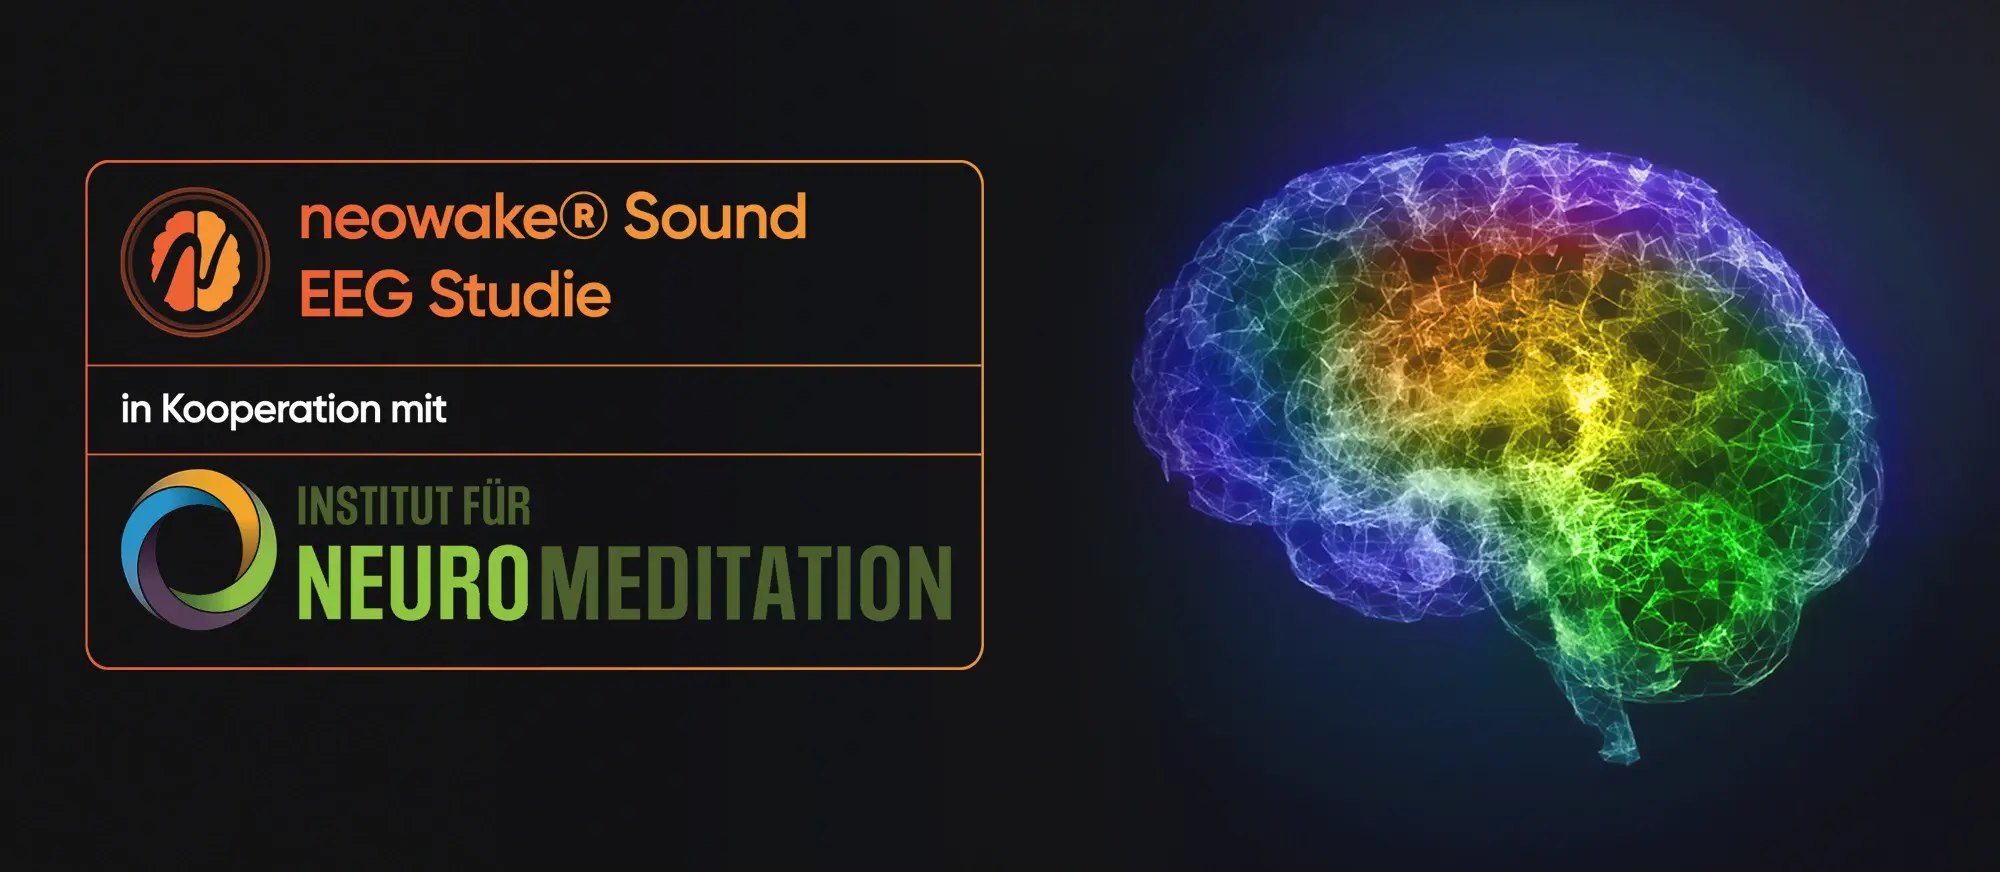 neowake® Sound EEG Studie